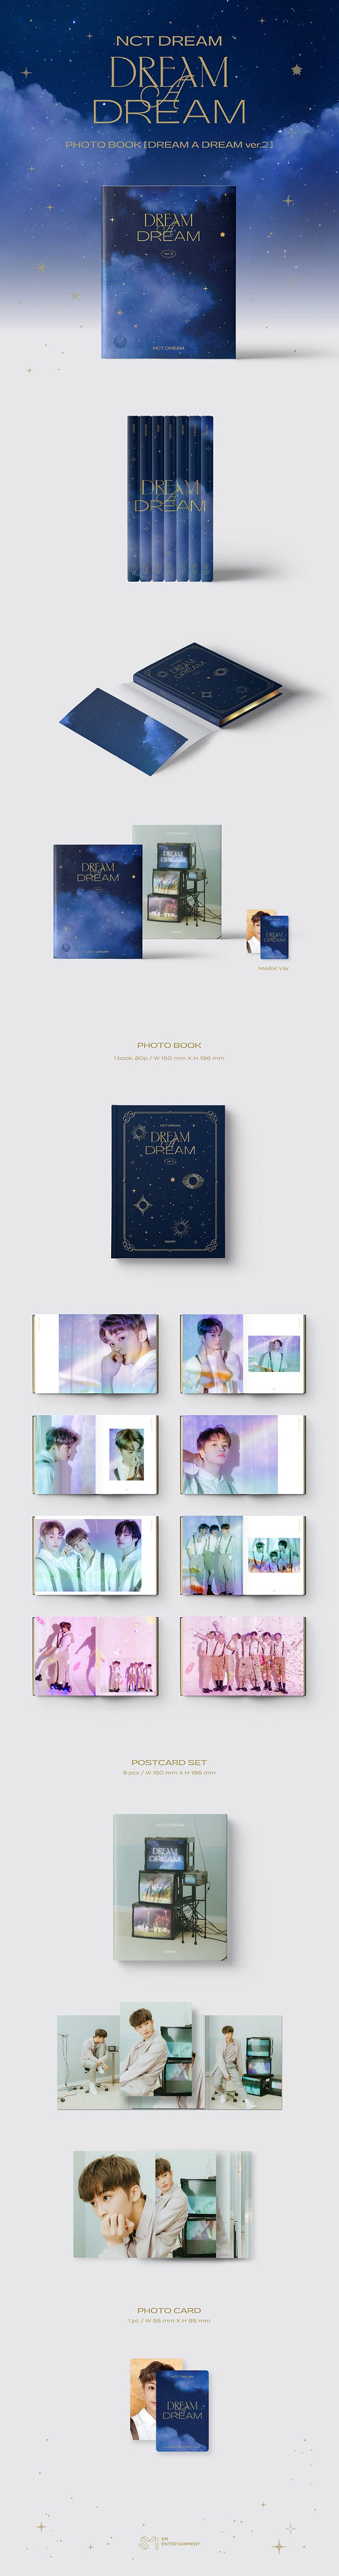 NCT DREAM - Photo Book DREAM A DREAM ver.2